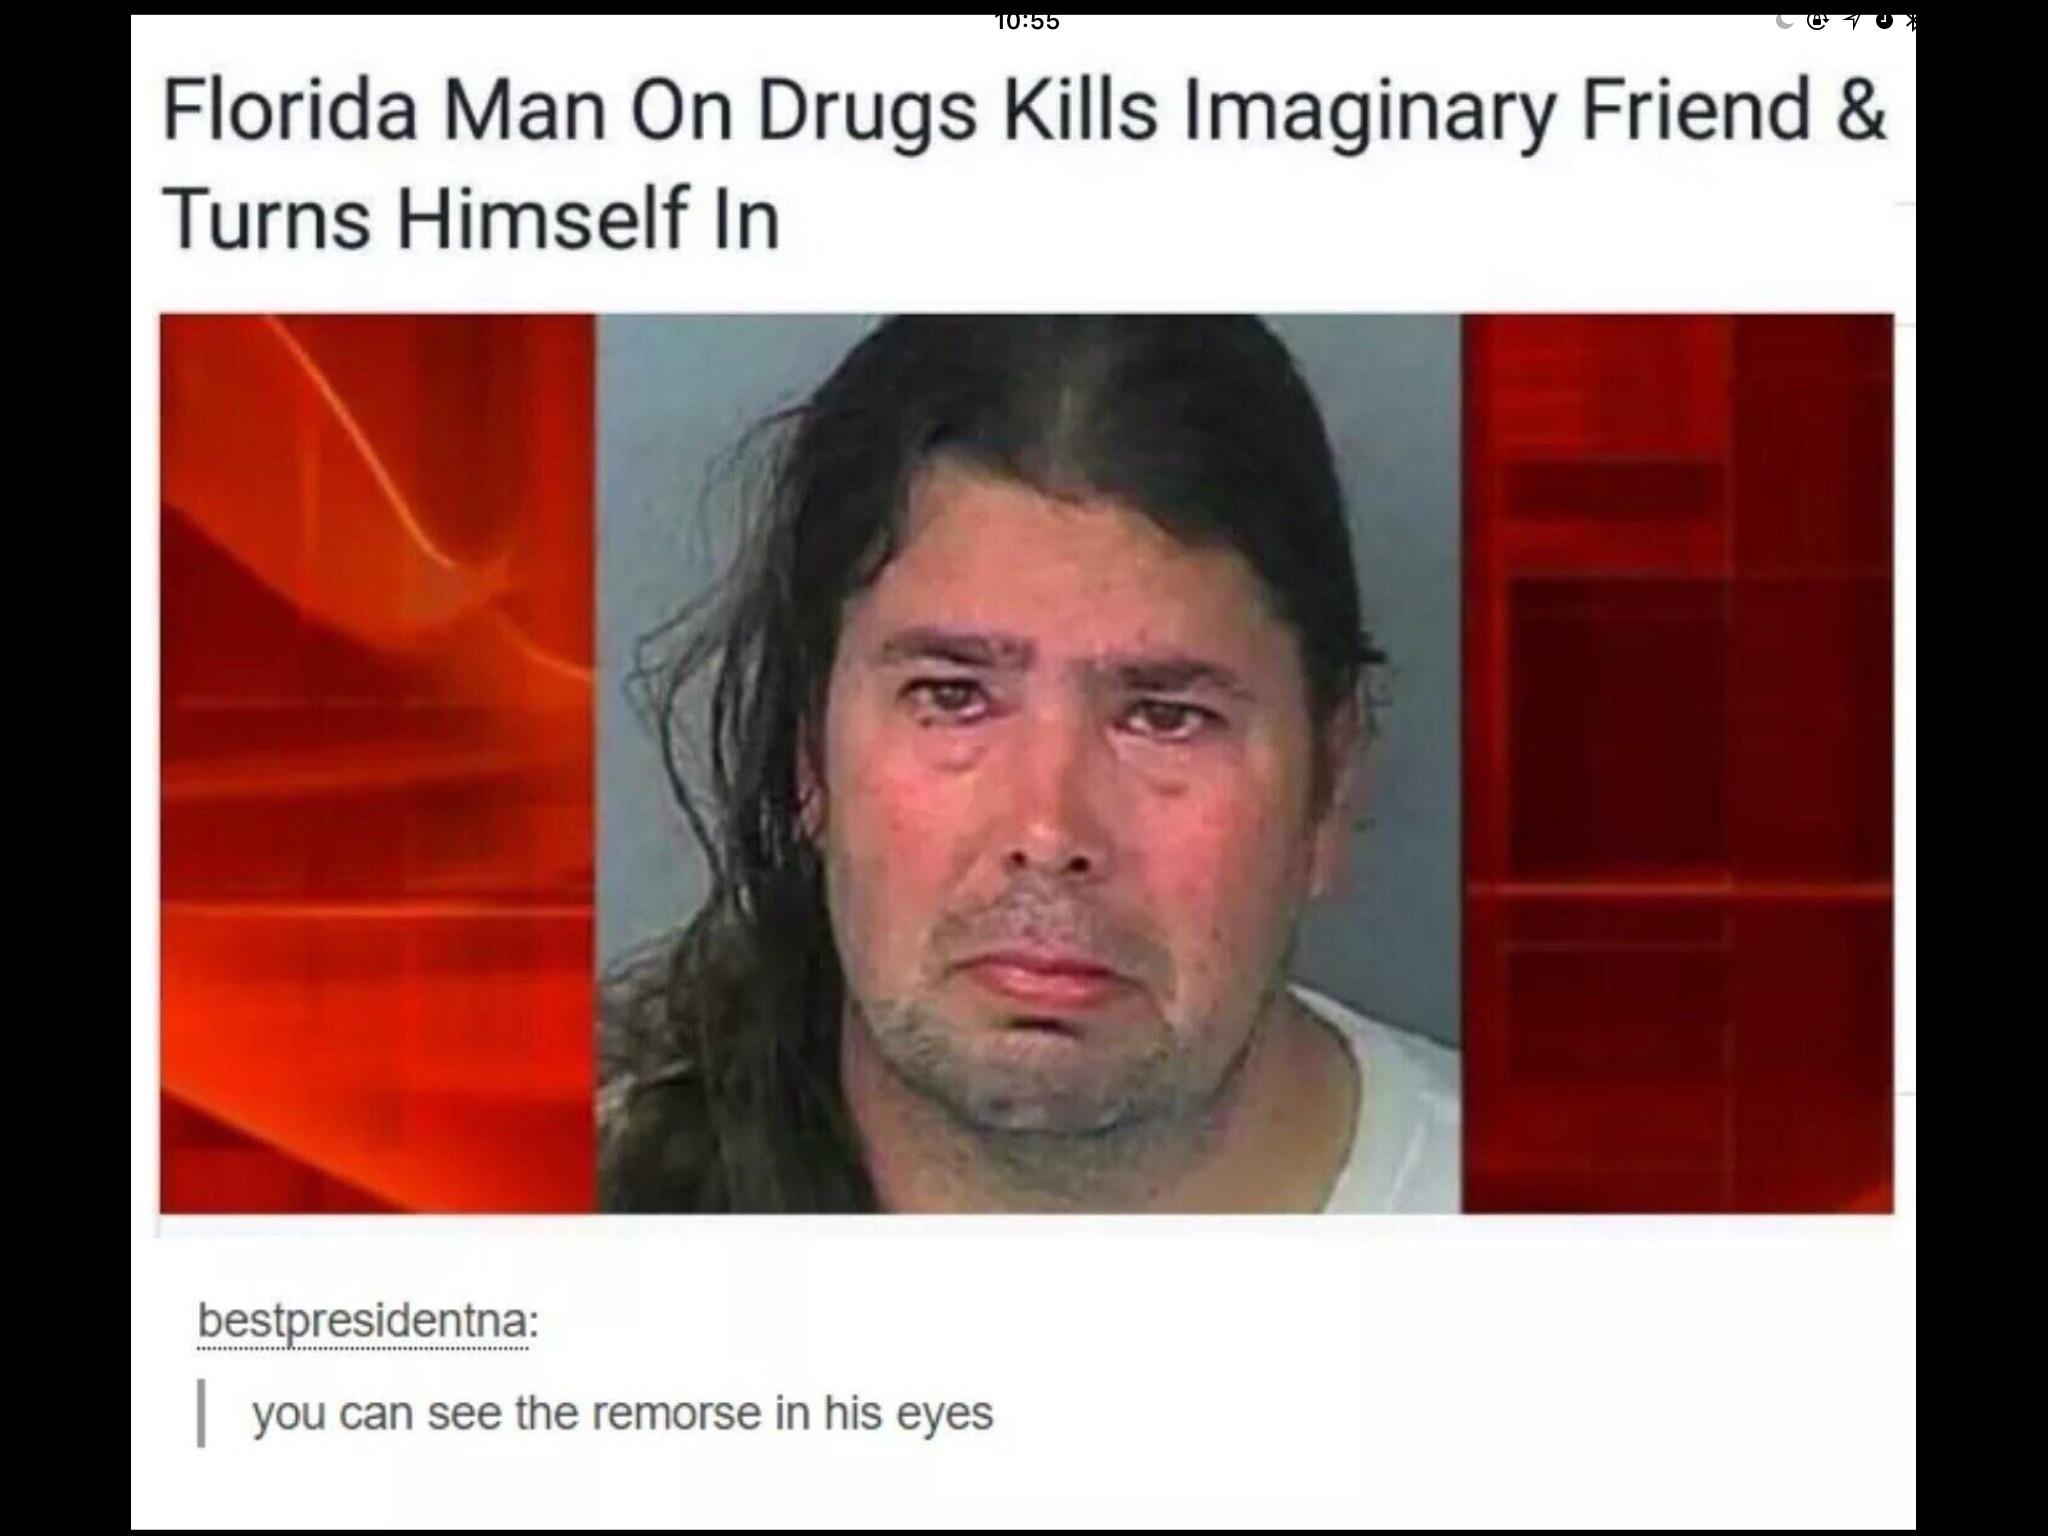 Florida Man challenge headline about killing his imaginary friend